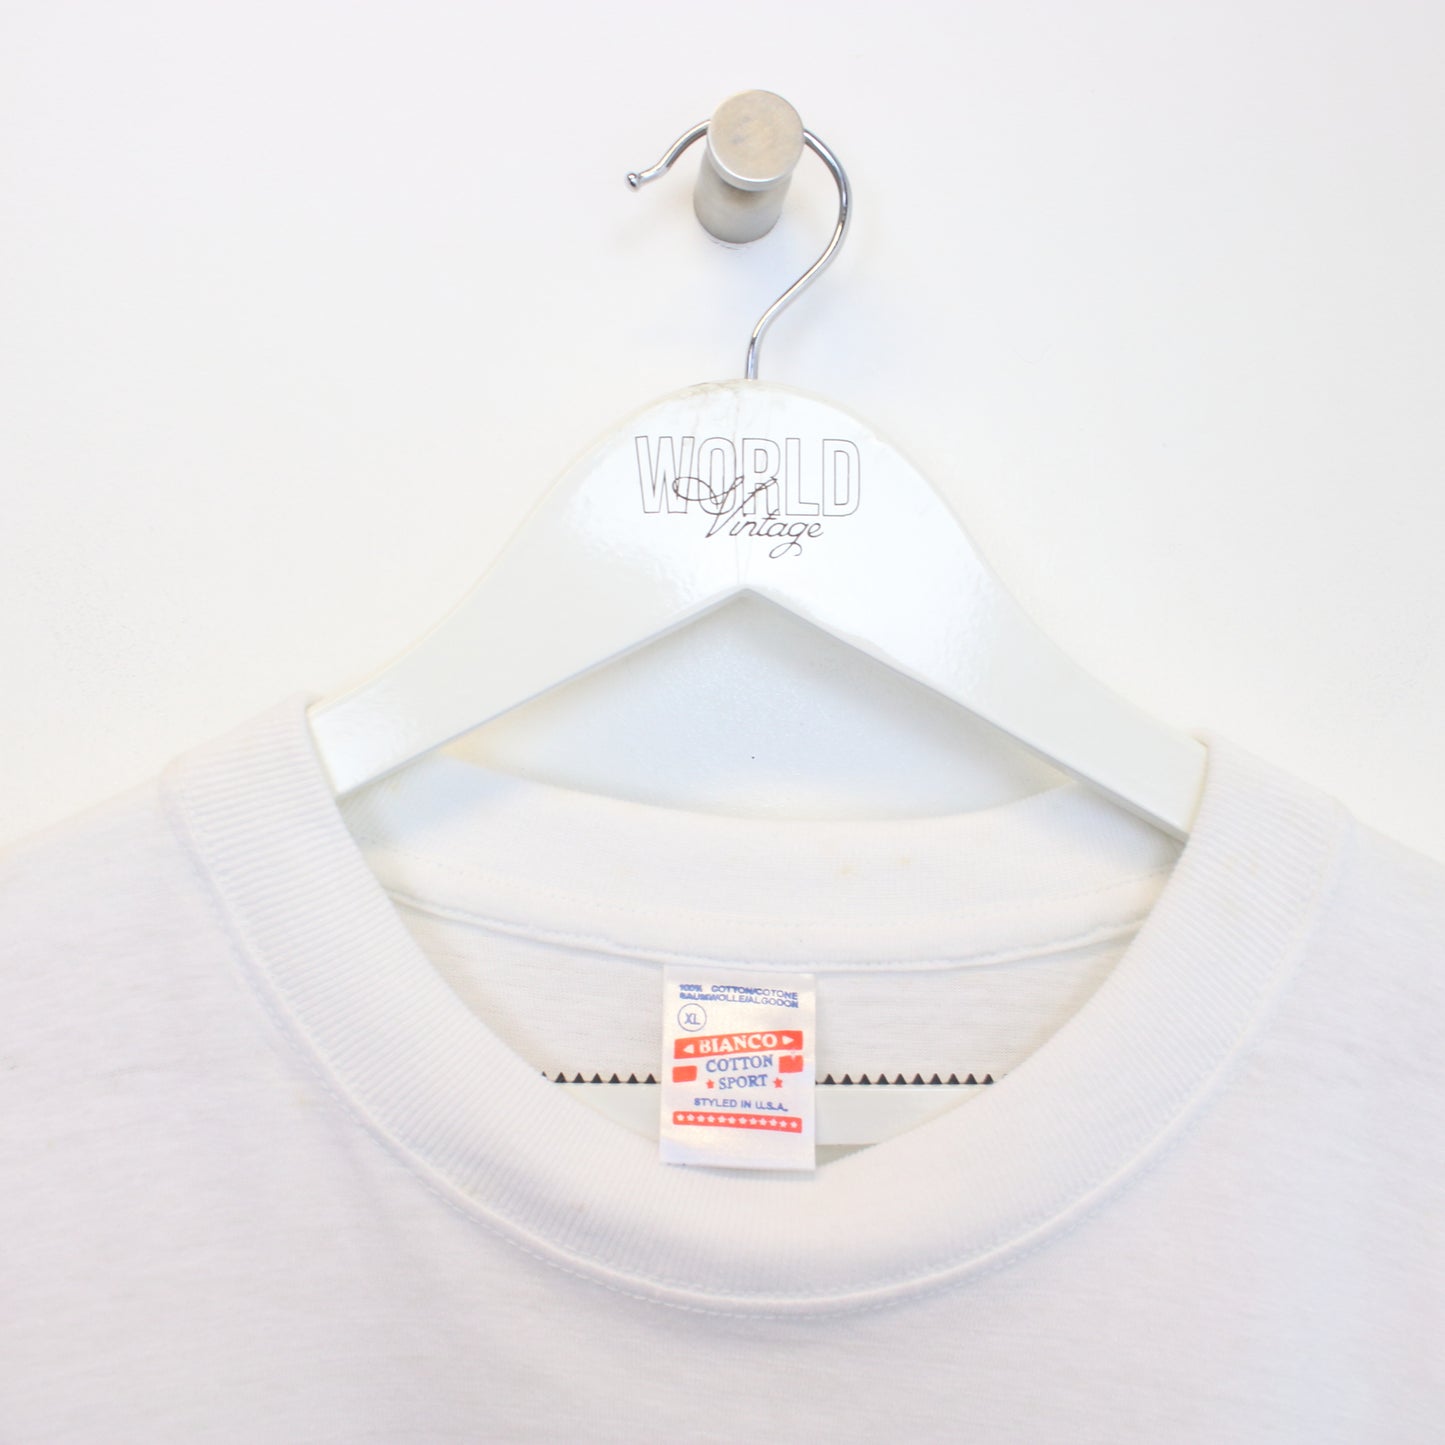 Vintage Bianco t-shirt in white. Best fits XL